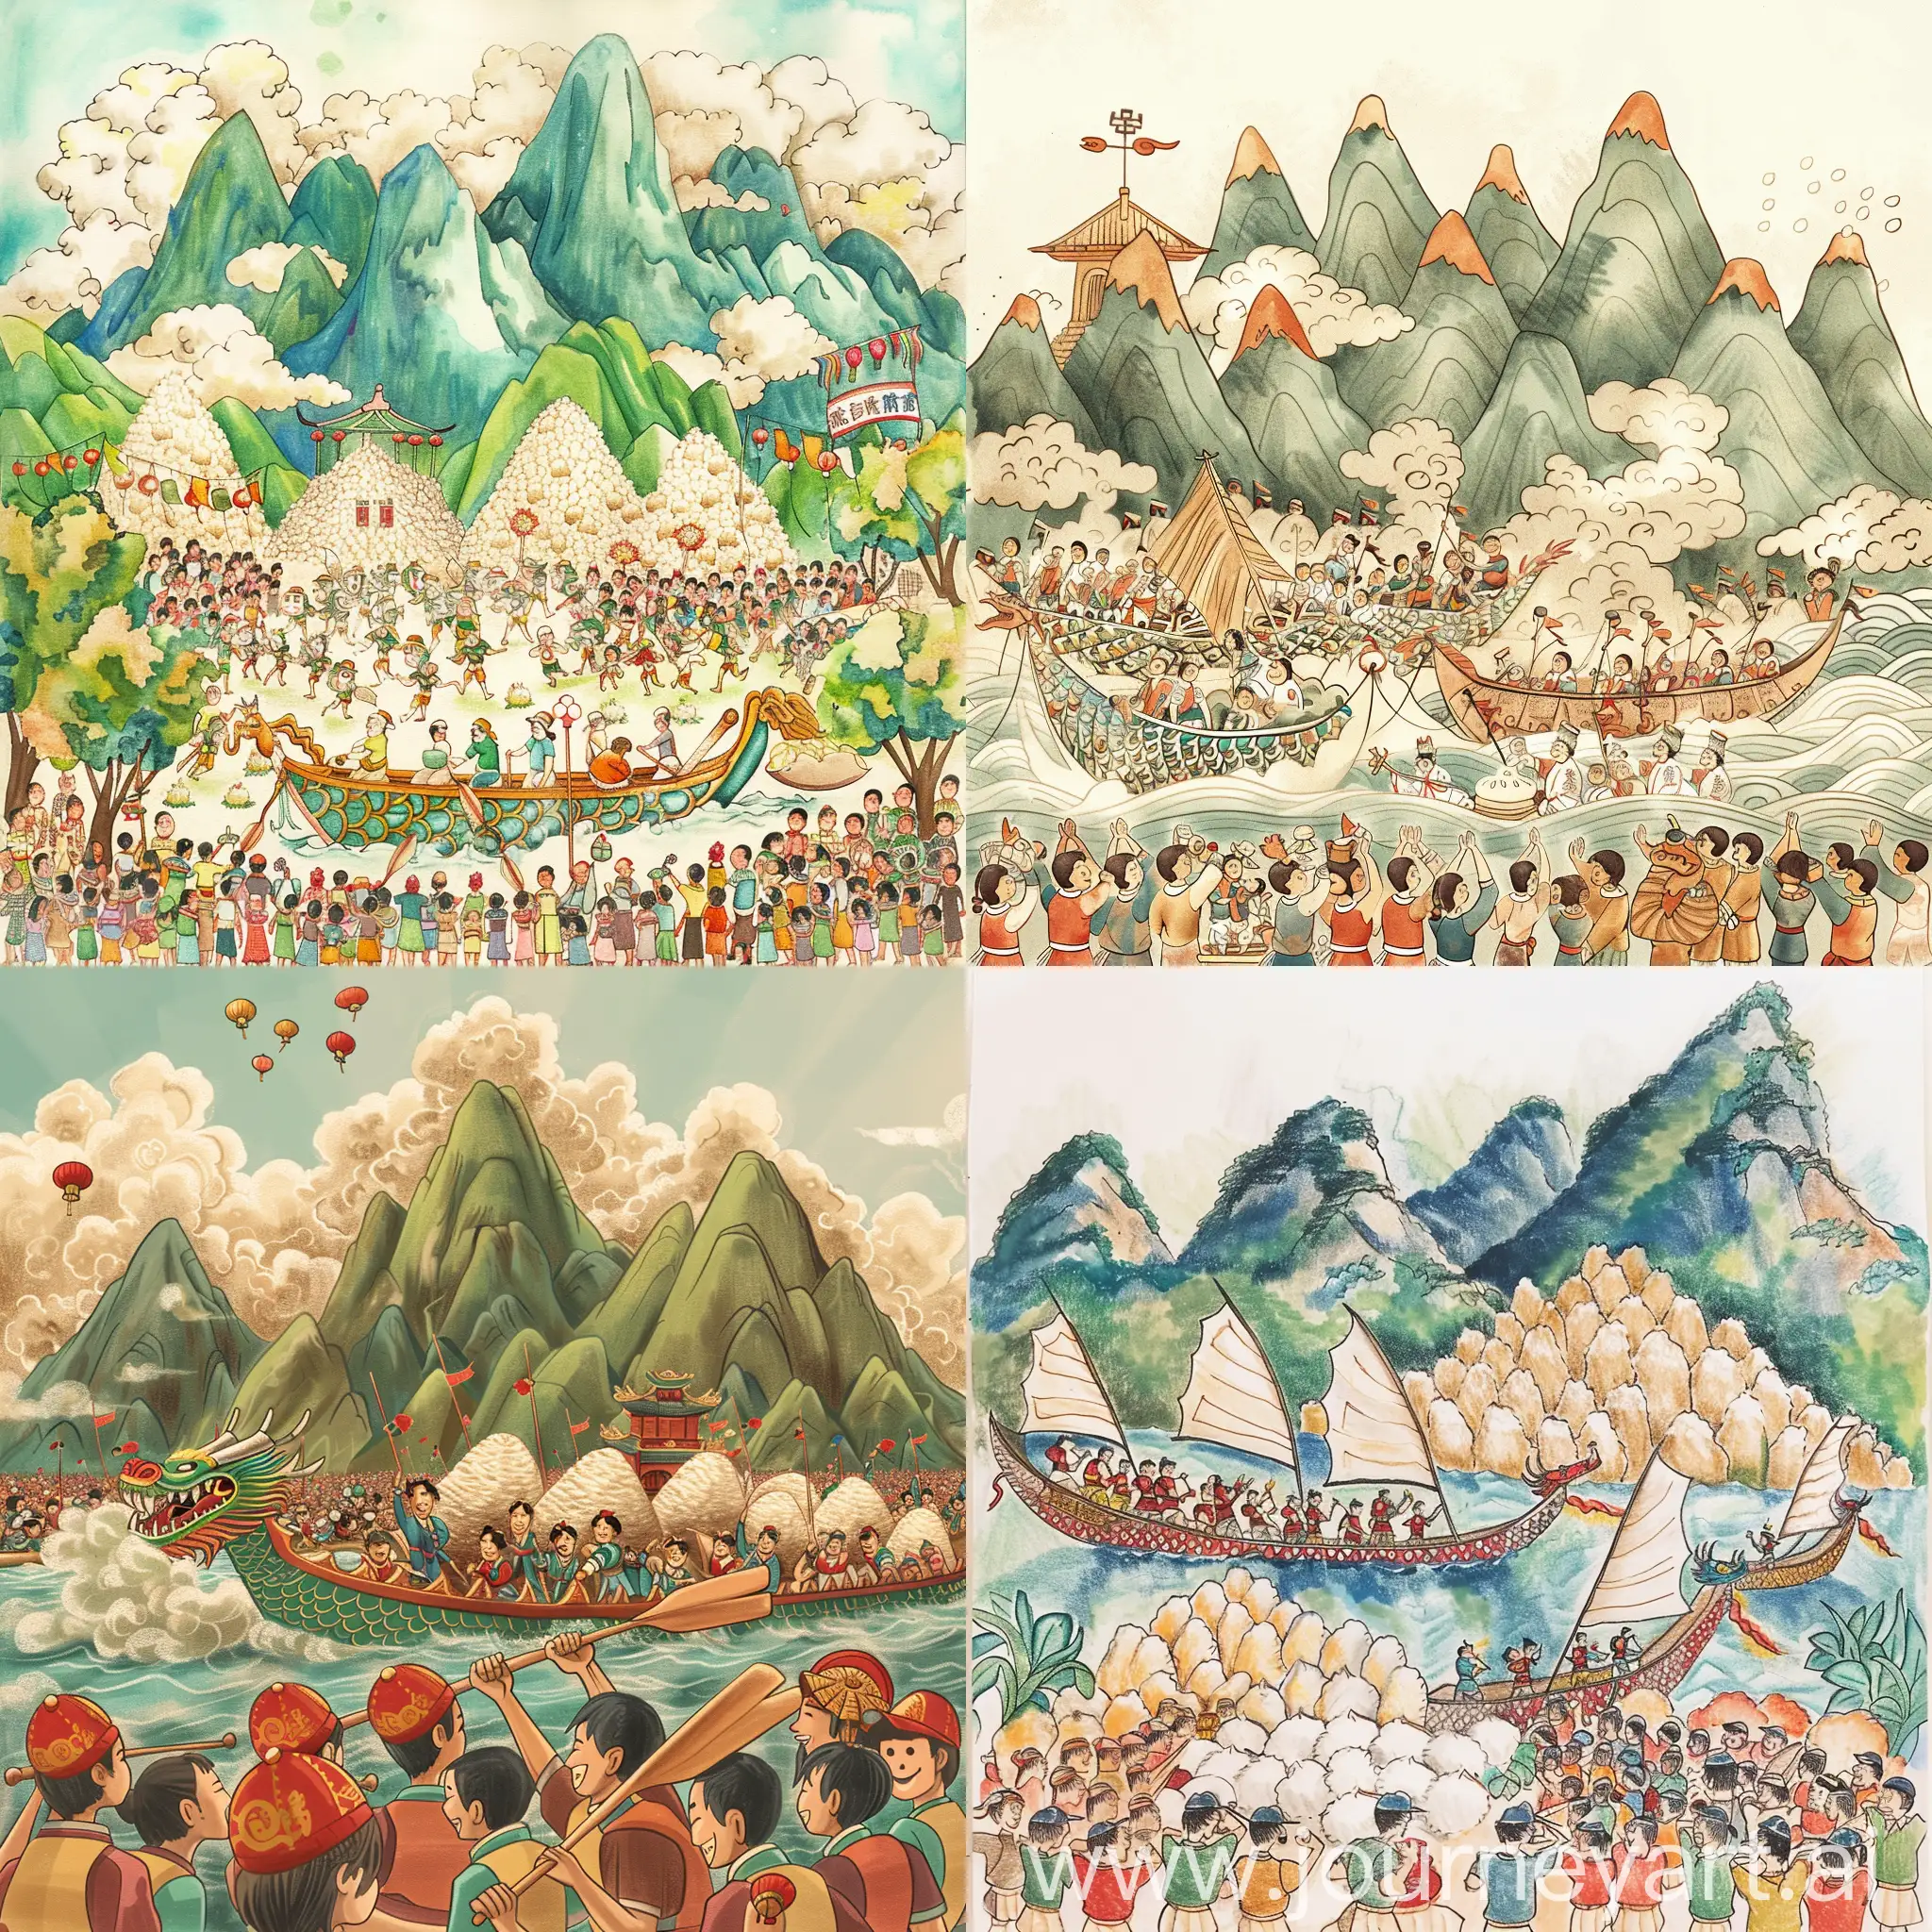 Joyful-Dragon-Boat-Festival-Celebration-Racing-Dragon-Boats-with-Mountains-of-Rice-Dumplings